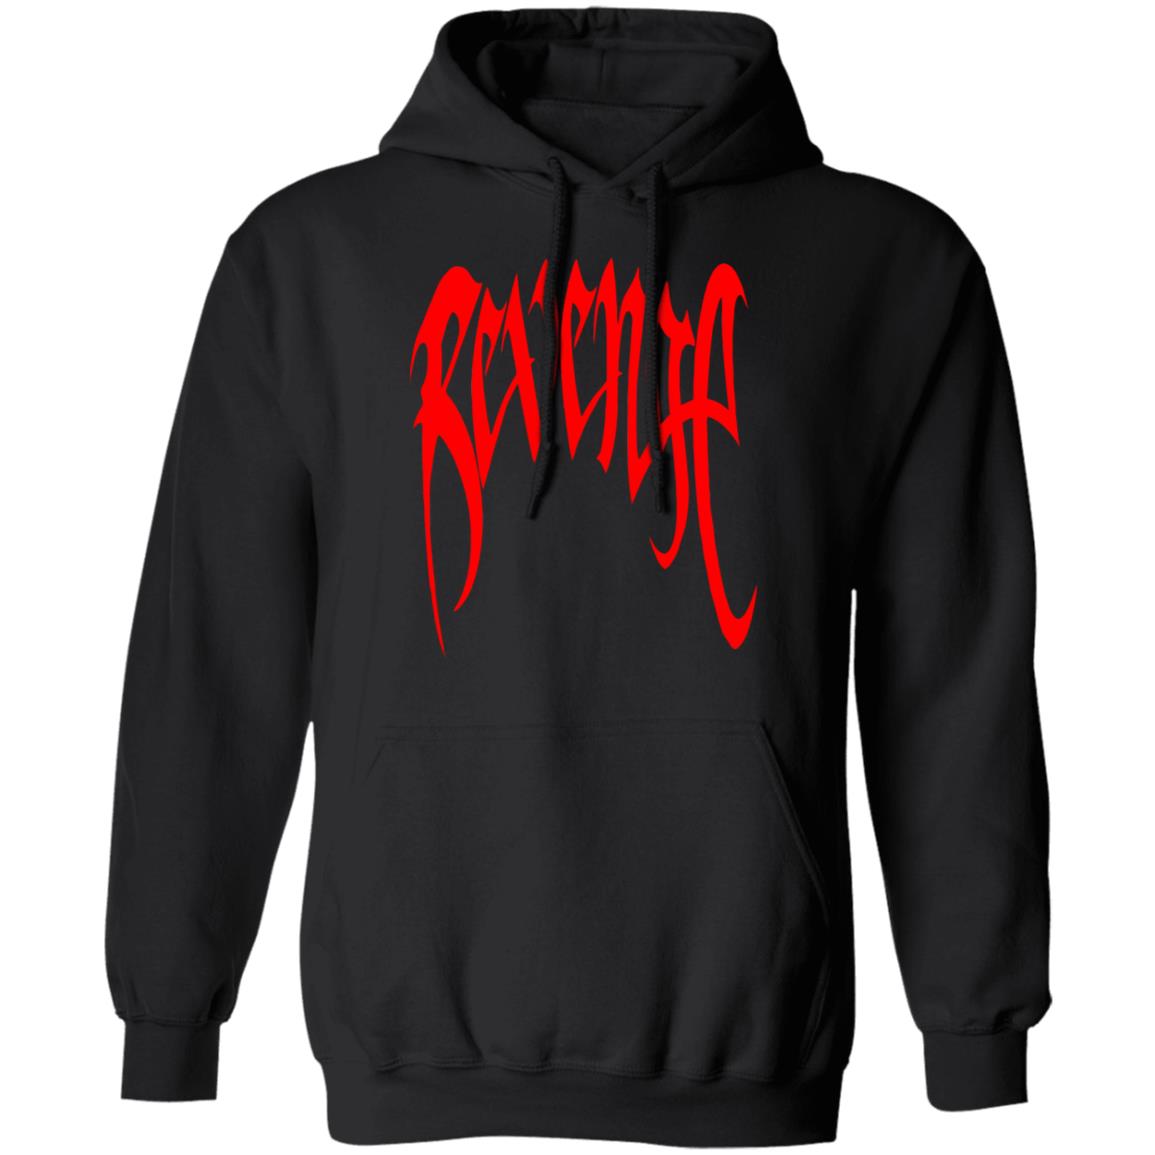 black and red revenge hoodie